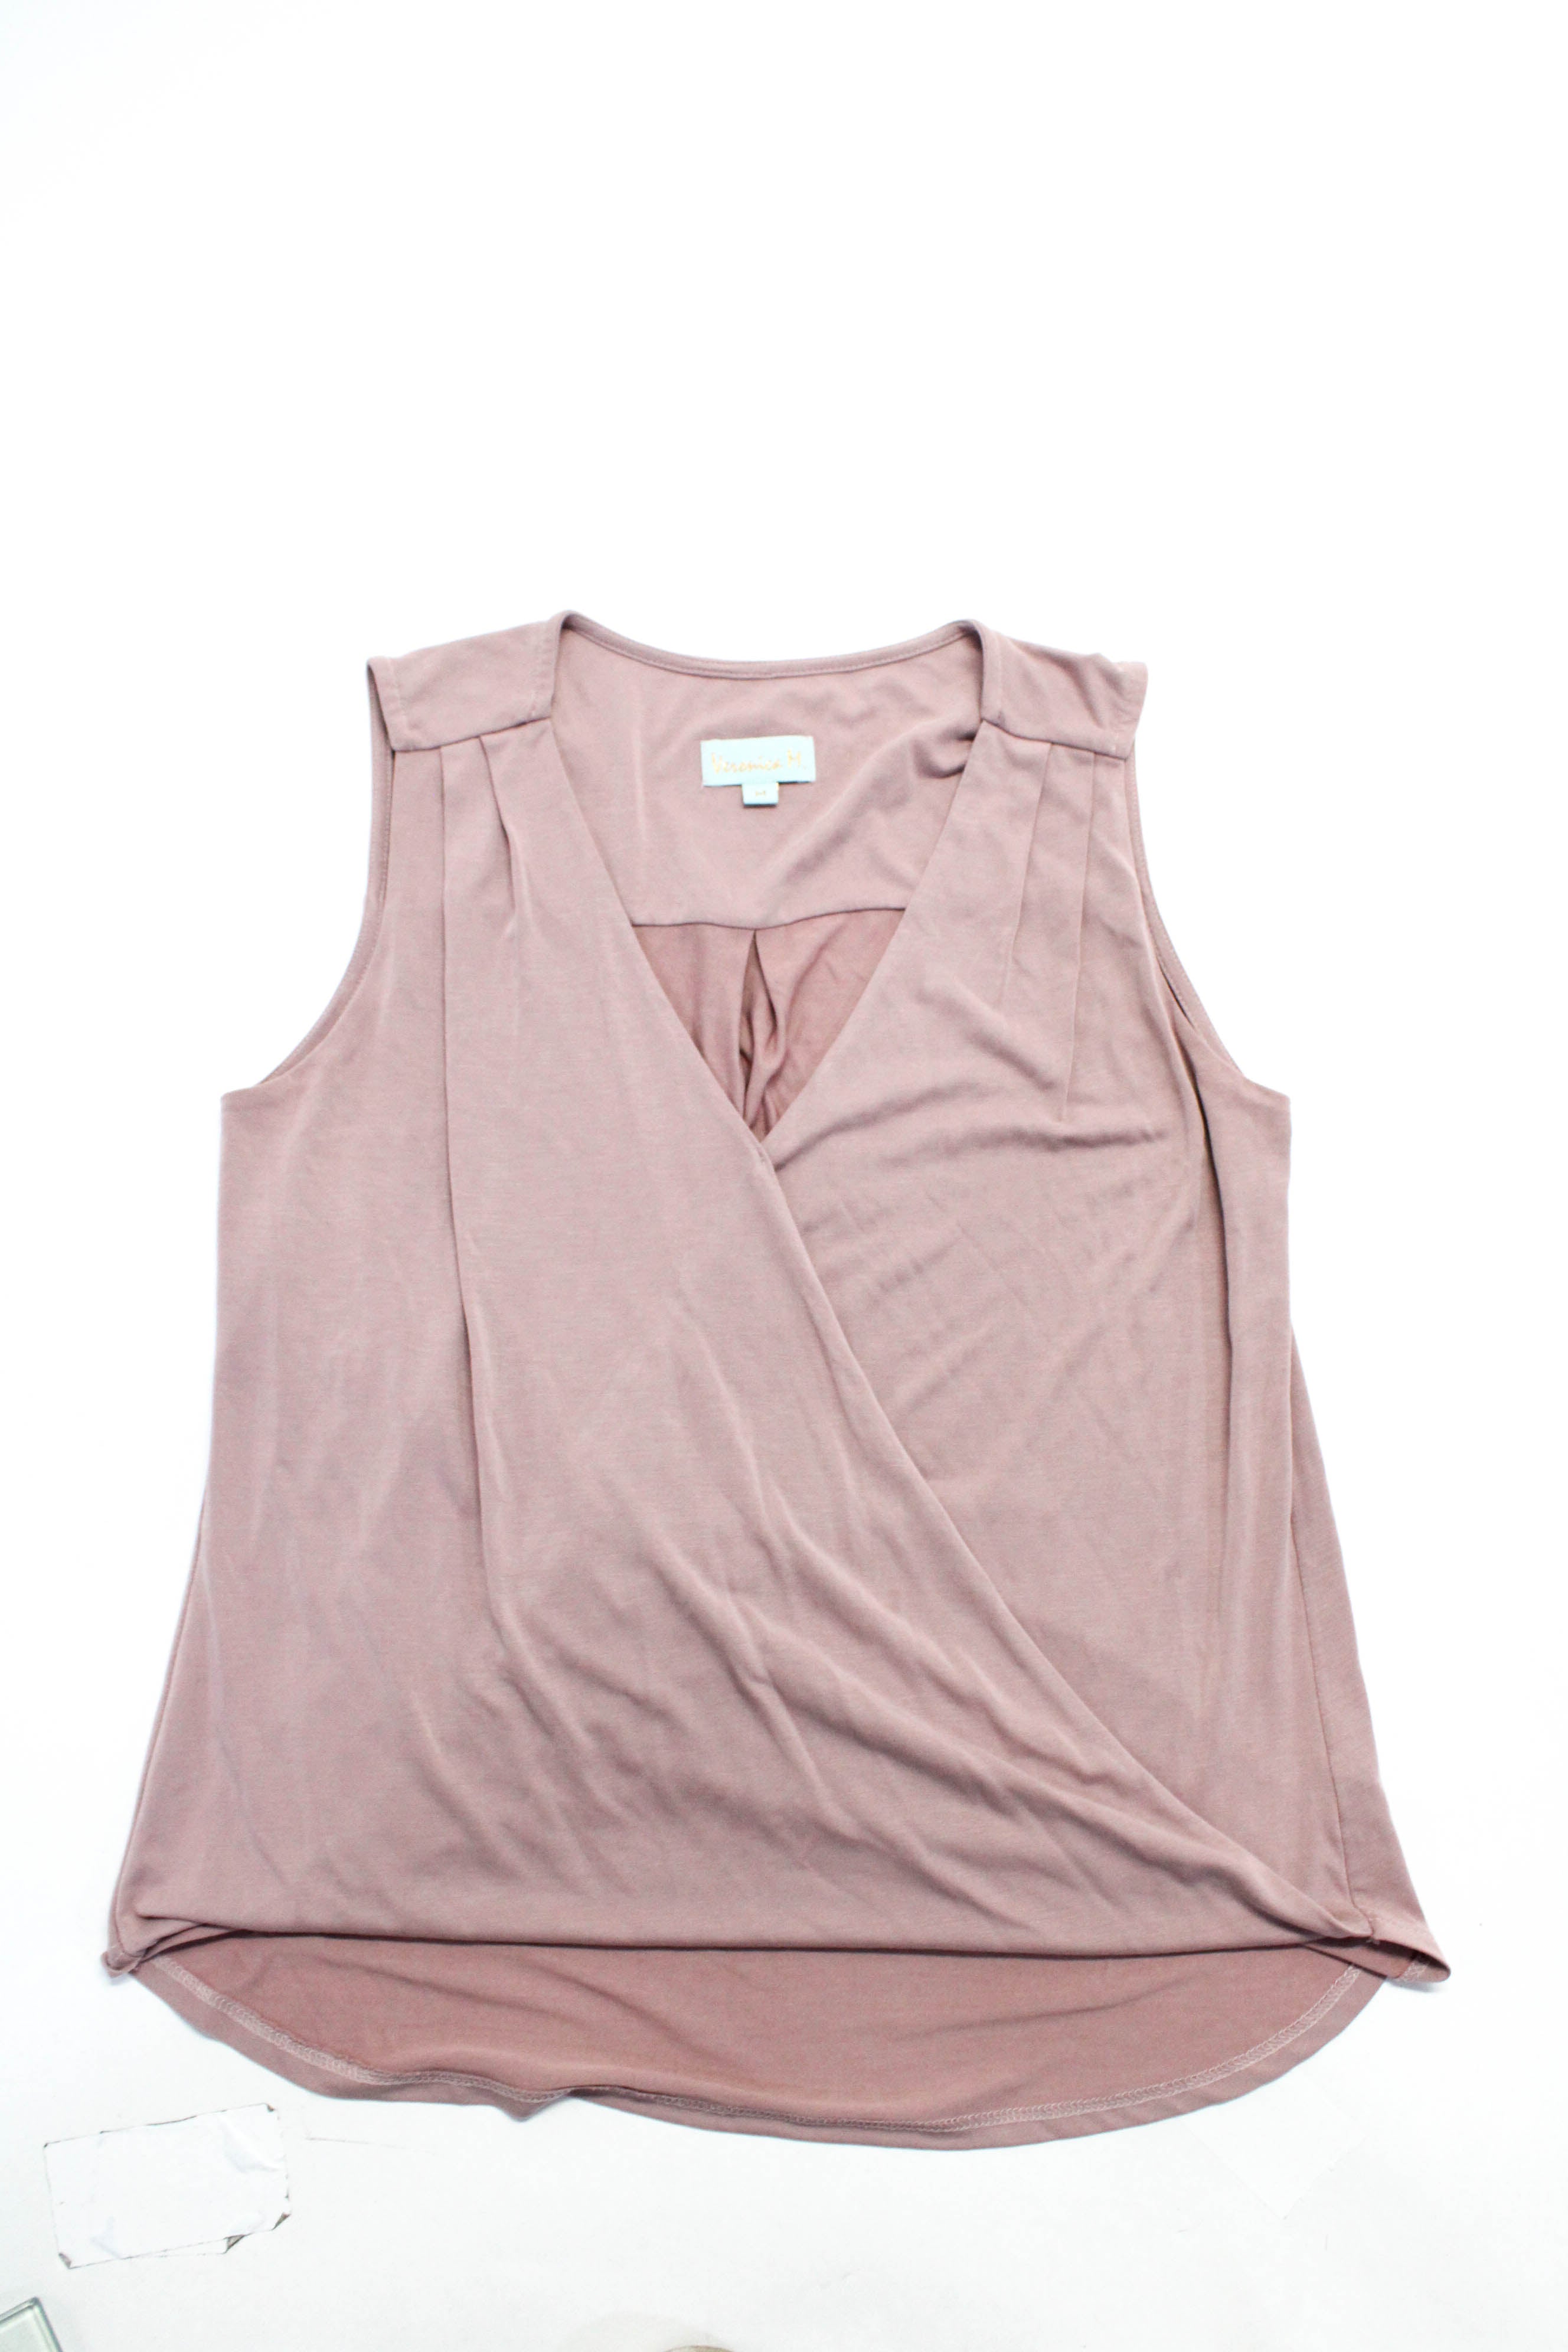 Veronica M Goldie Womens Long Sleeve Top Tee Shirt Tank Top Size Mediu -  Shop Linda's Stuff